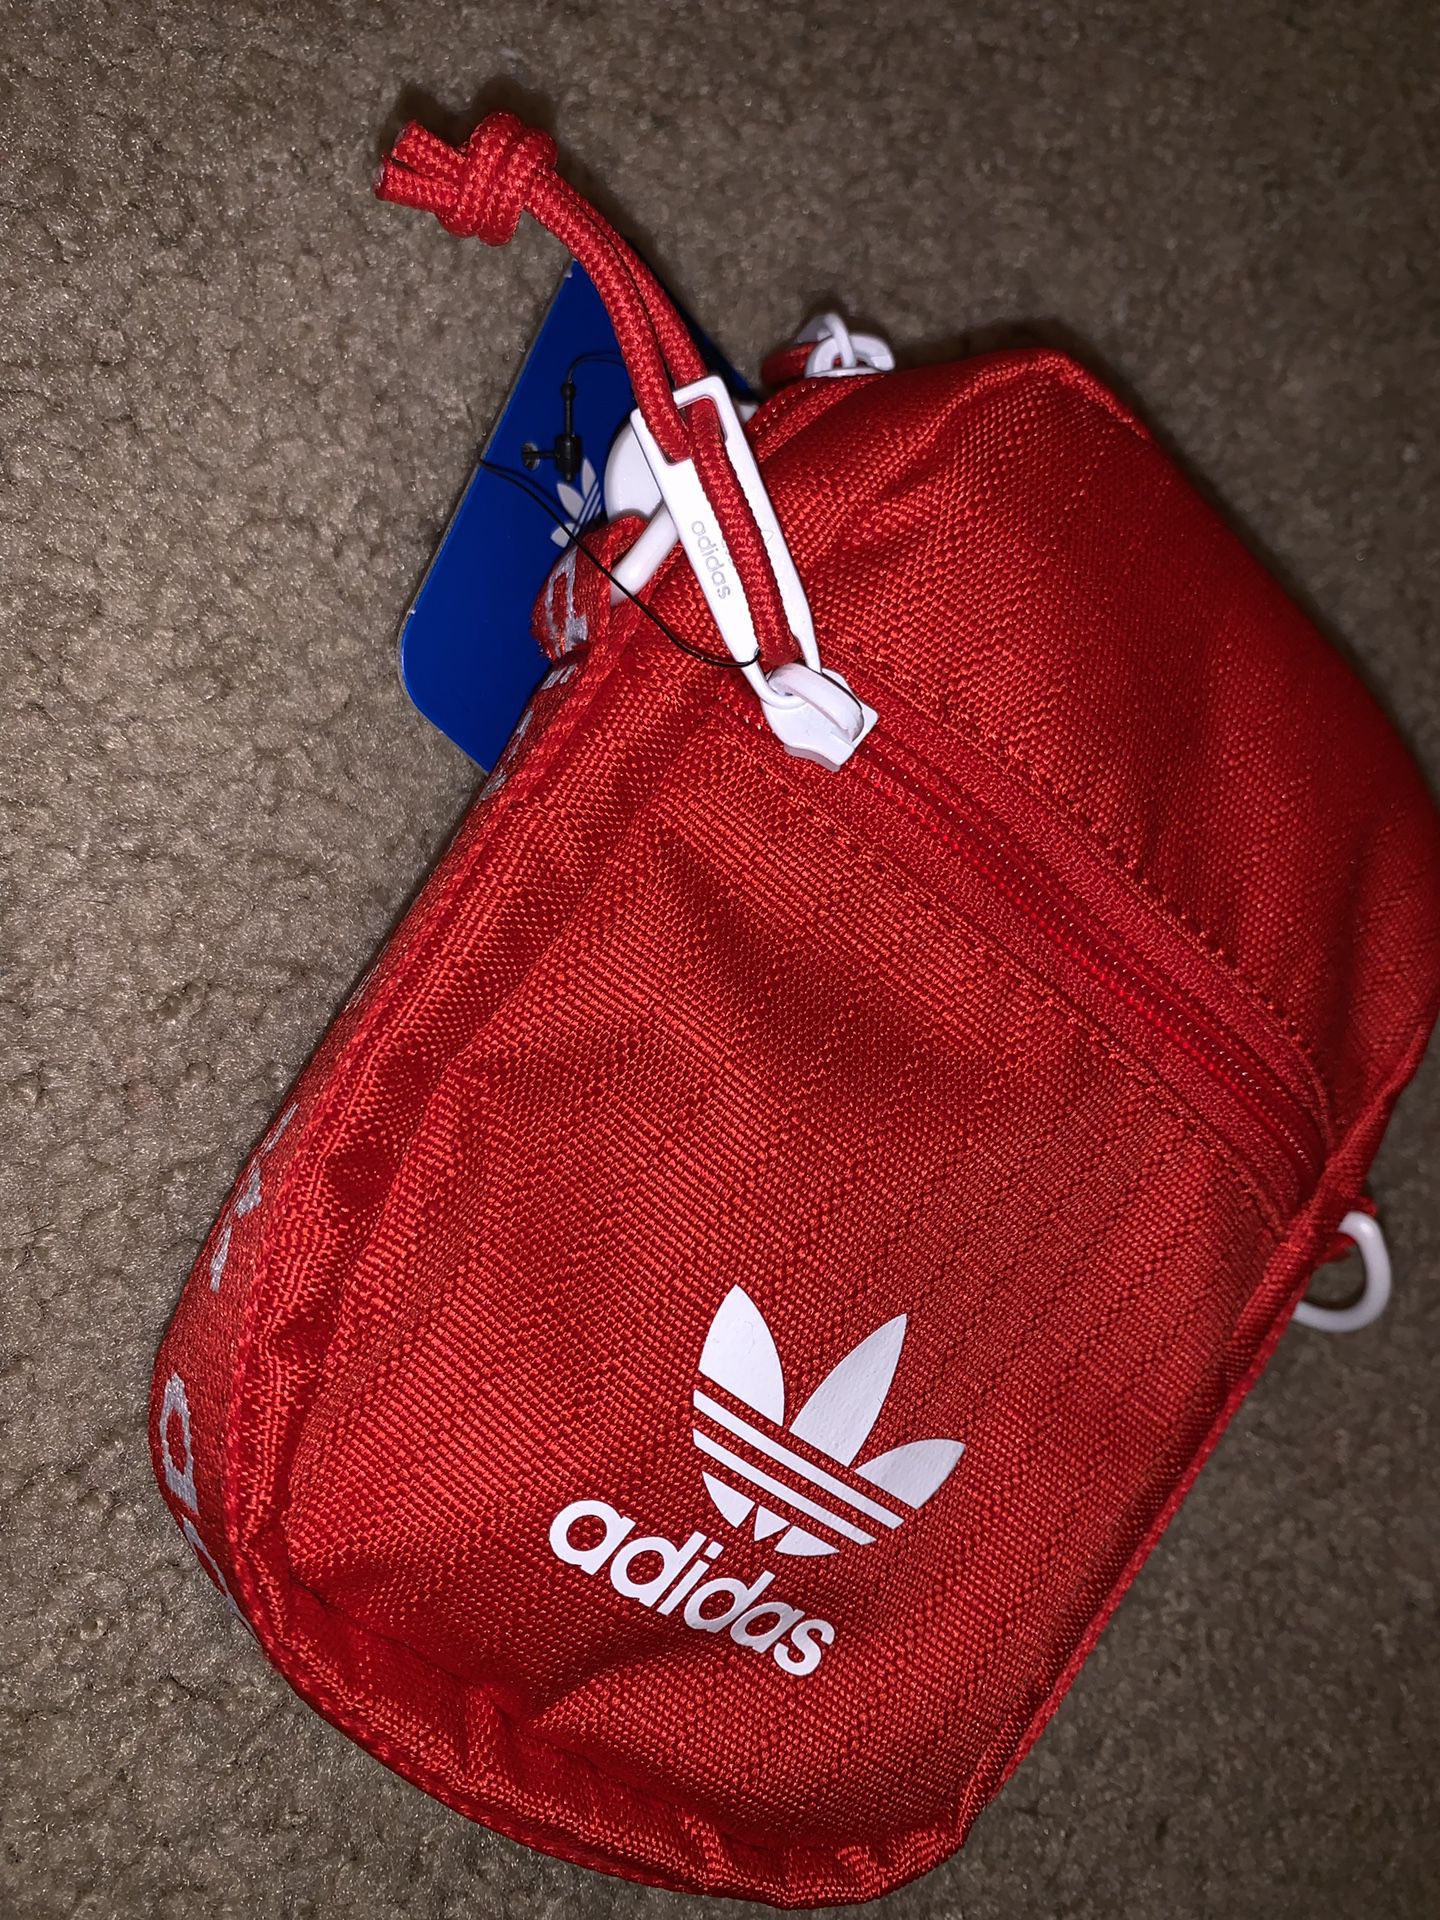 Adidas Crossbody Bag